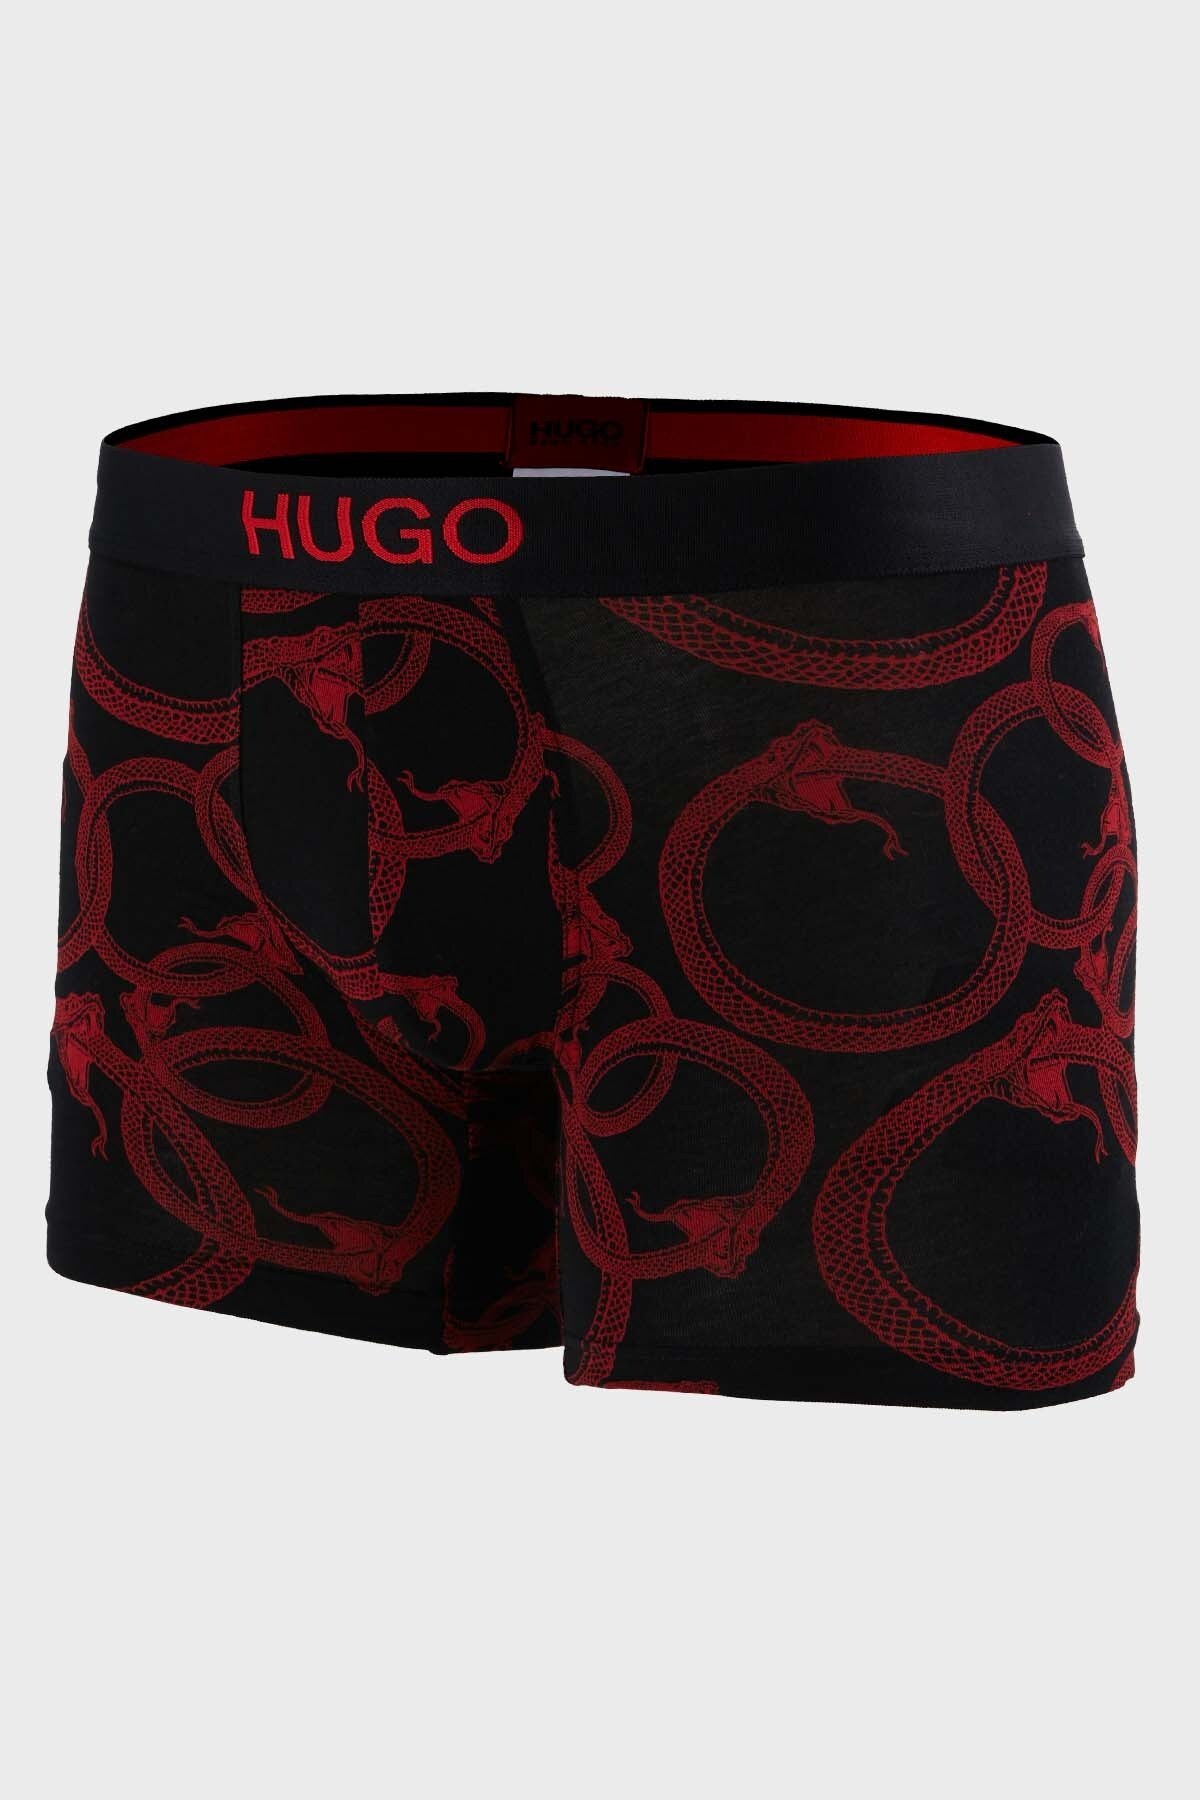 Hugo Boss 2 Pack Erkek Boxer 504585906 40A SİYAH